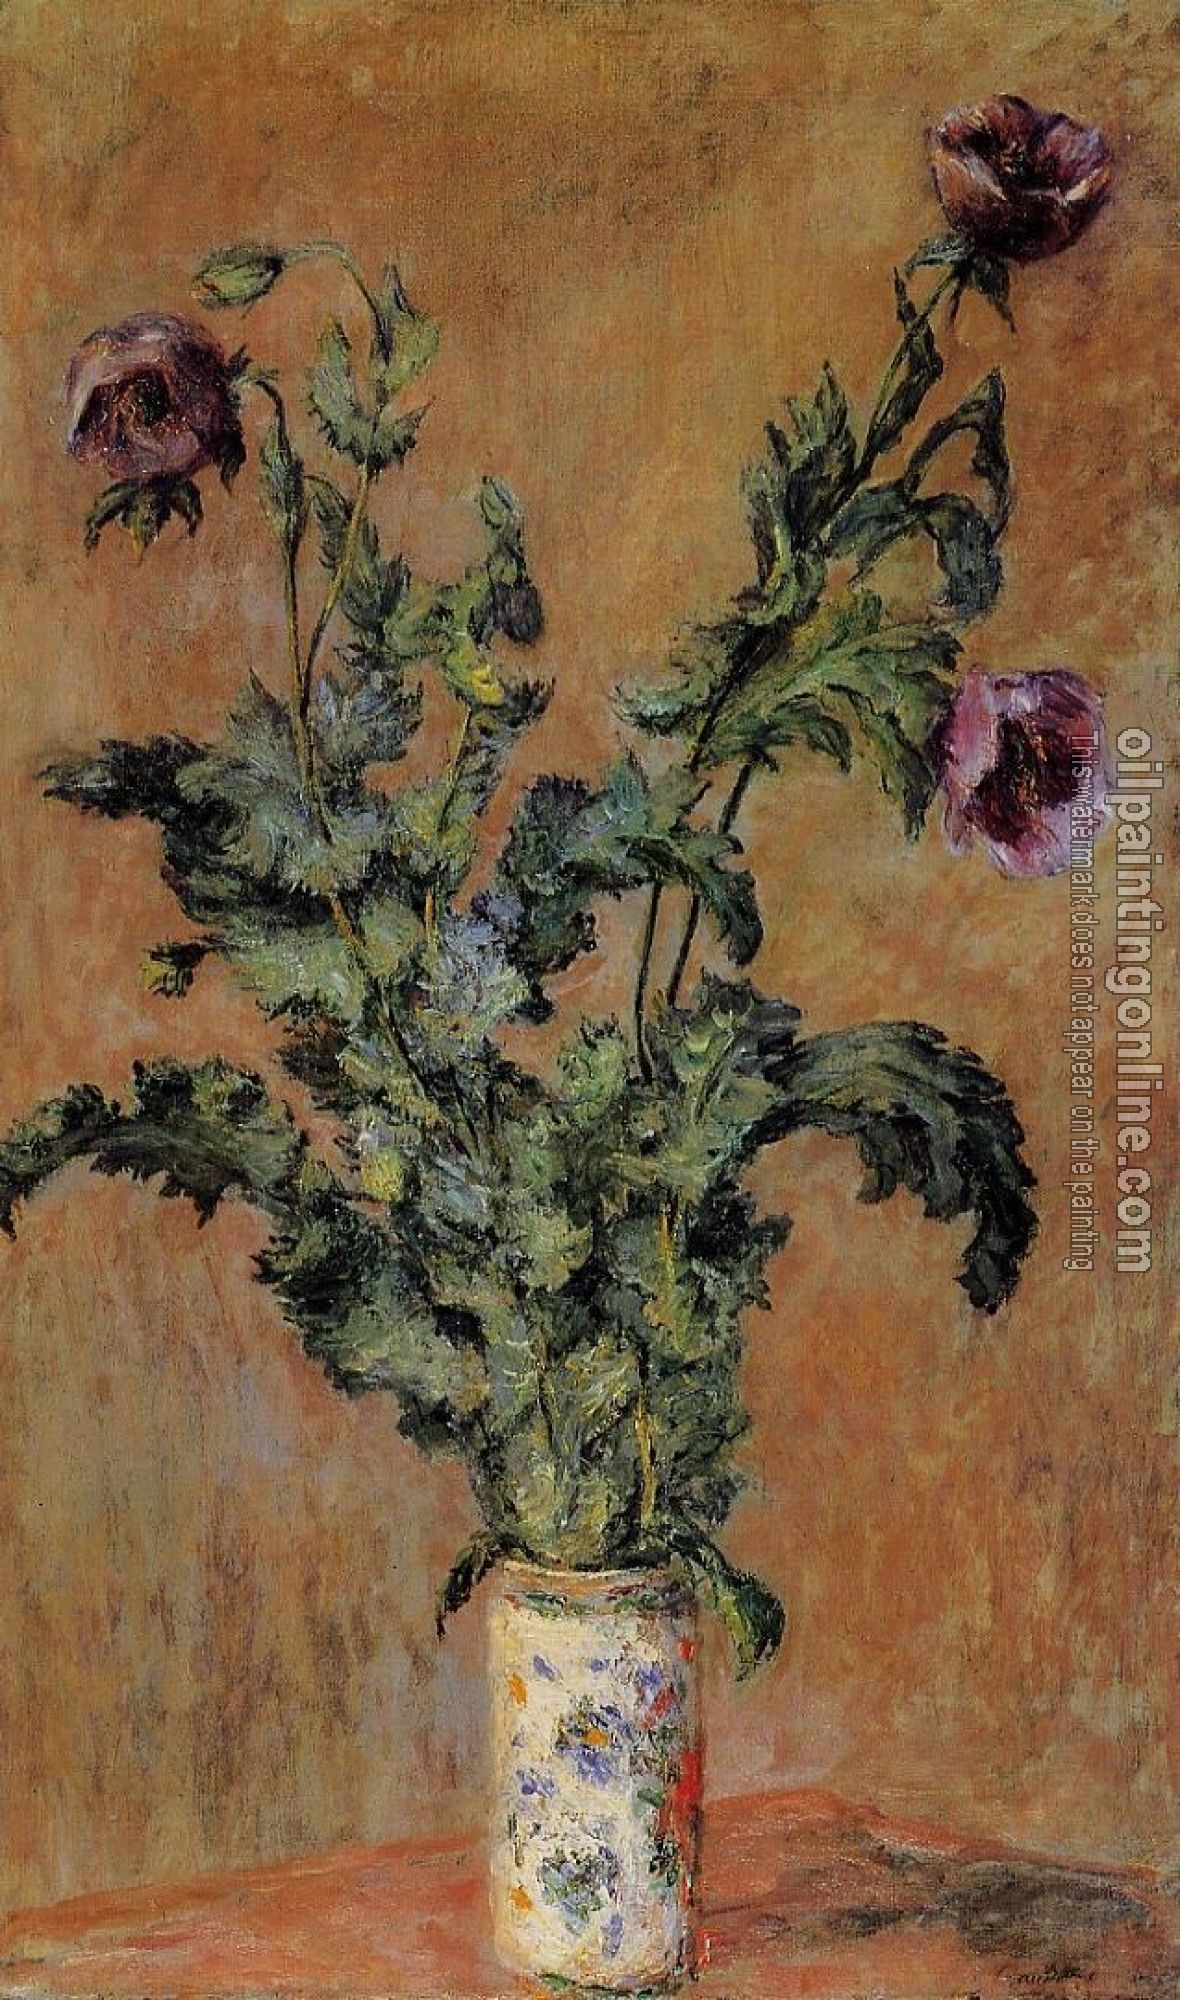 Monet, Claude Oscar - Vase of Poppies